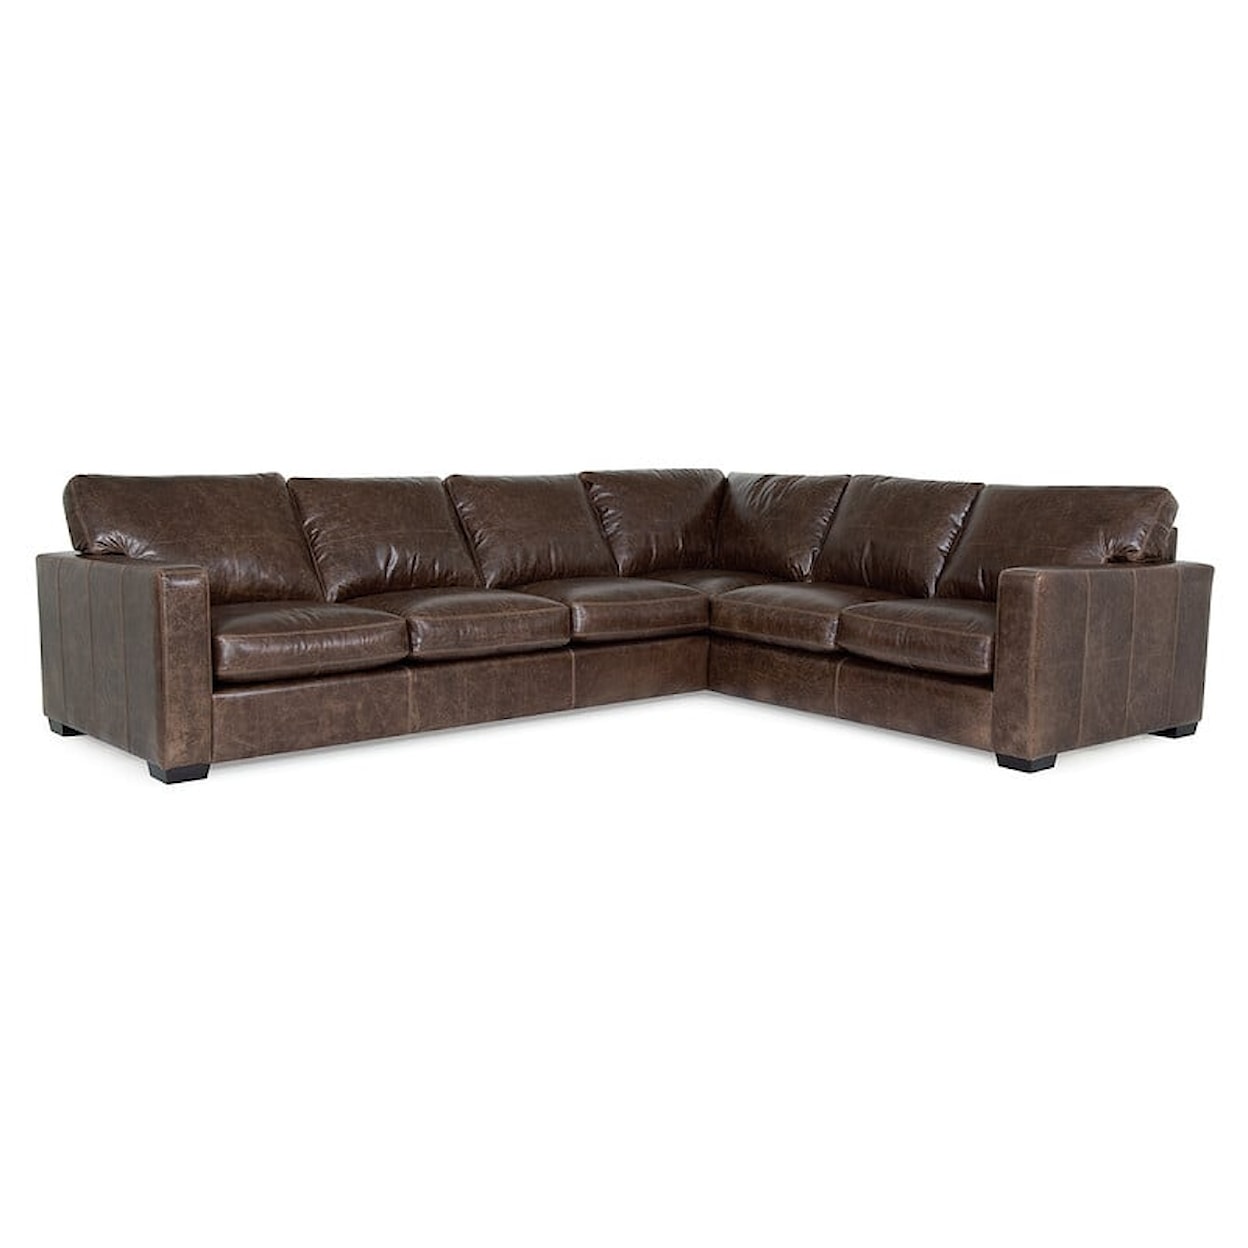 Palliser Colebrook Colebrook 5-Seat Sectional Sofa